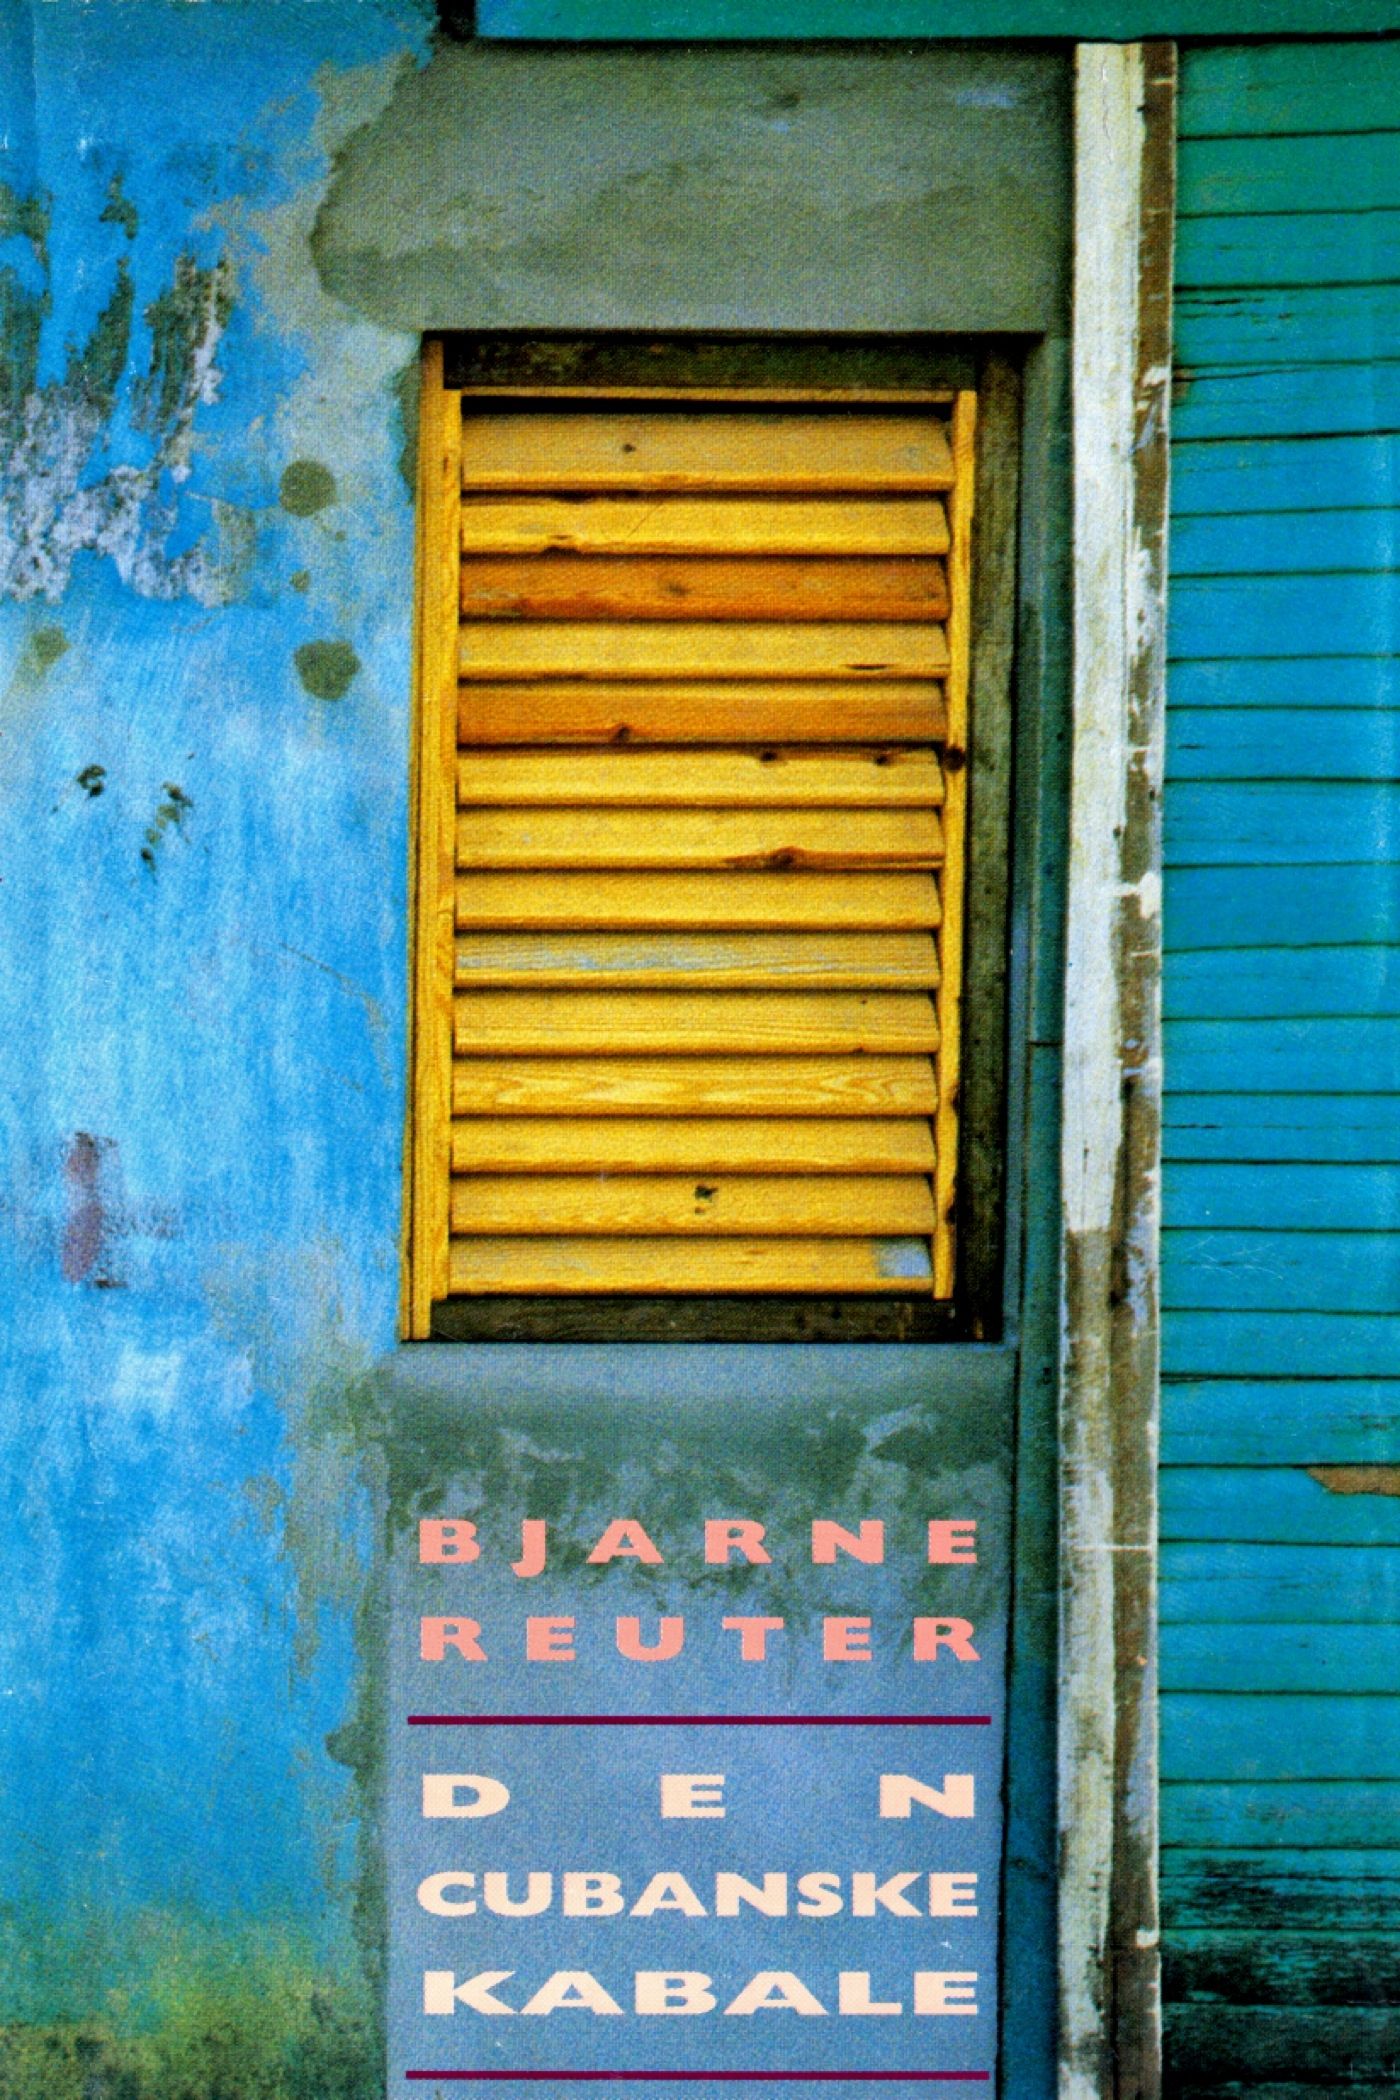 Den cubanske kabale, eBook by Bjarne Reuter